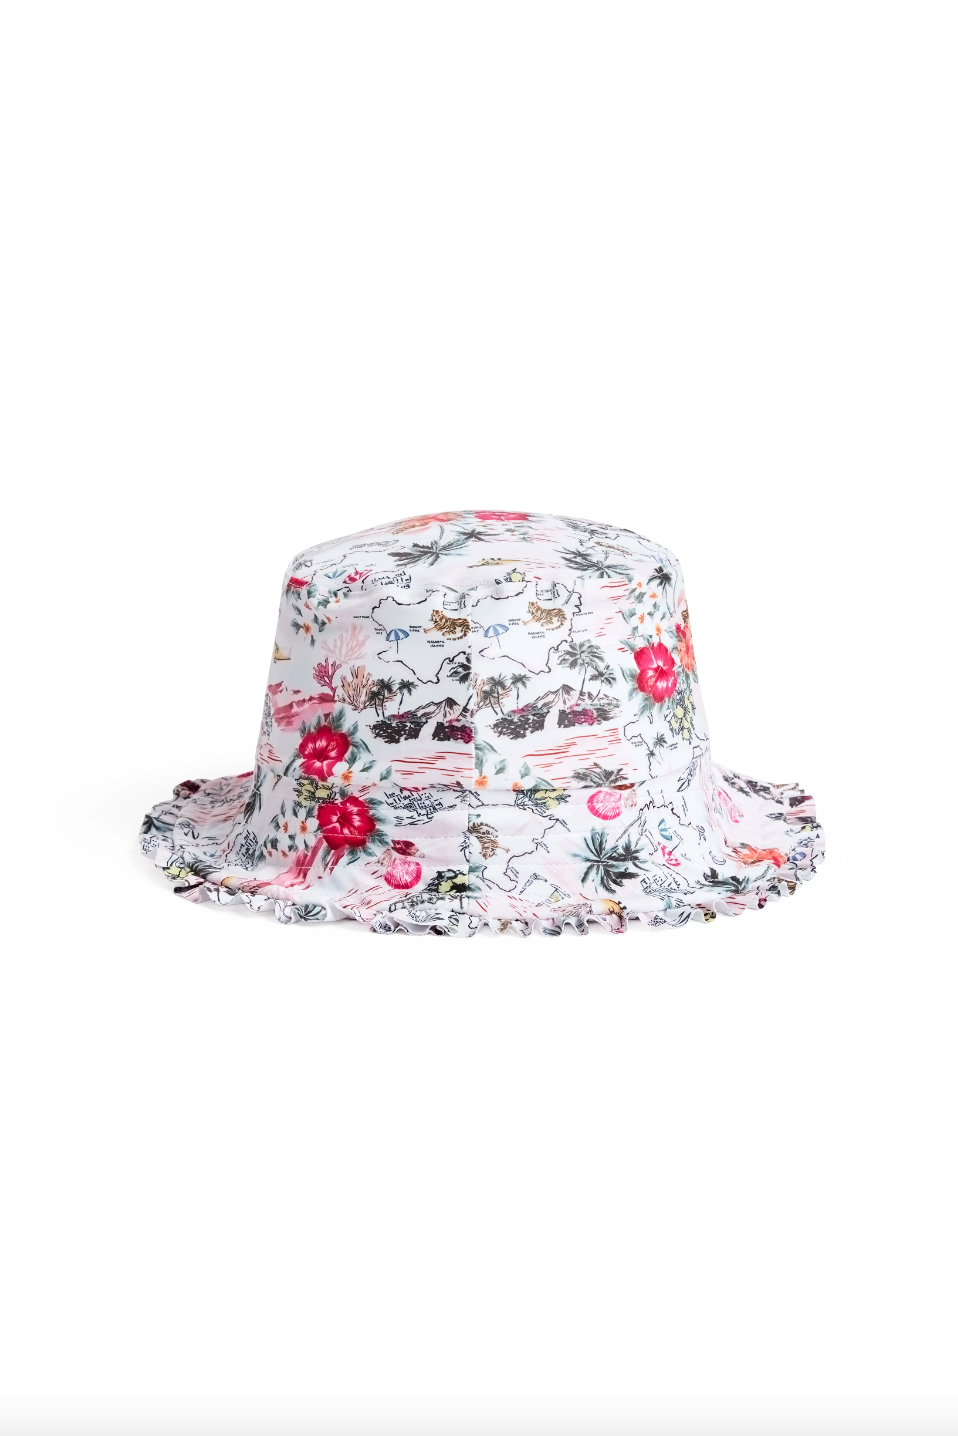 Seafolly Coast to Coast Bucket Hat